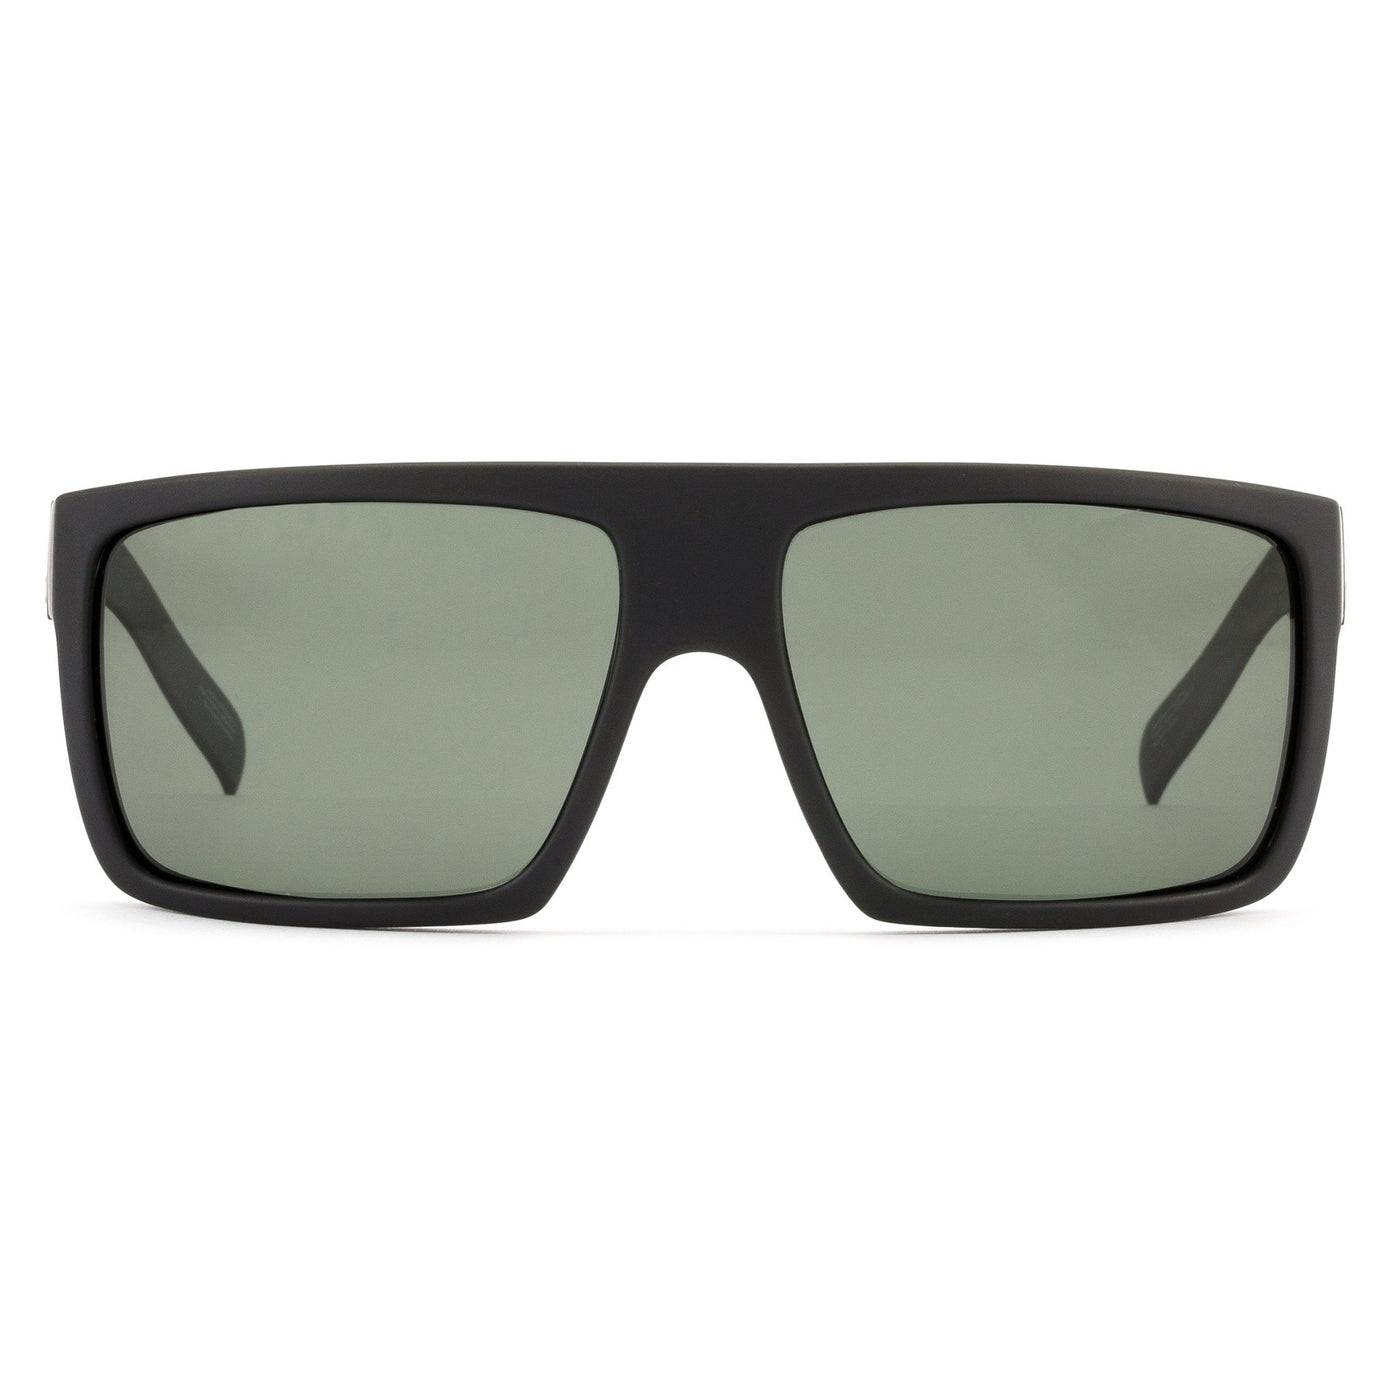 Black OTIS Eyewear sunglasses